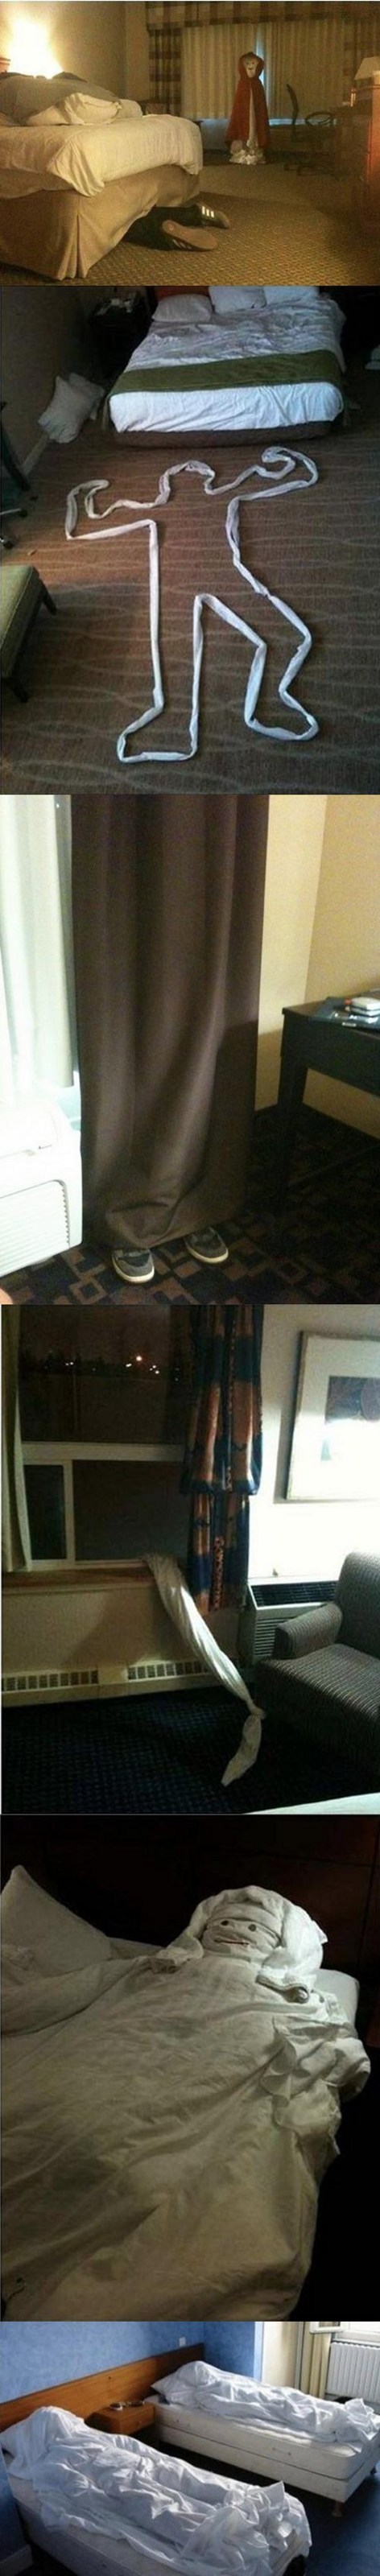 hotel room prank